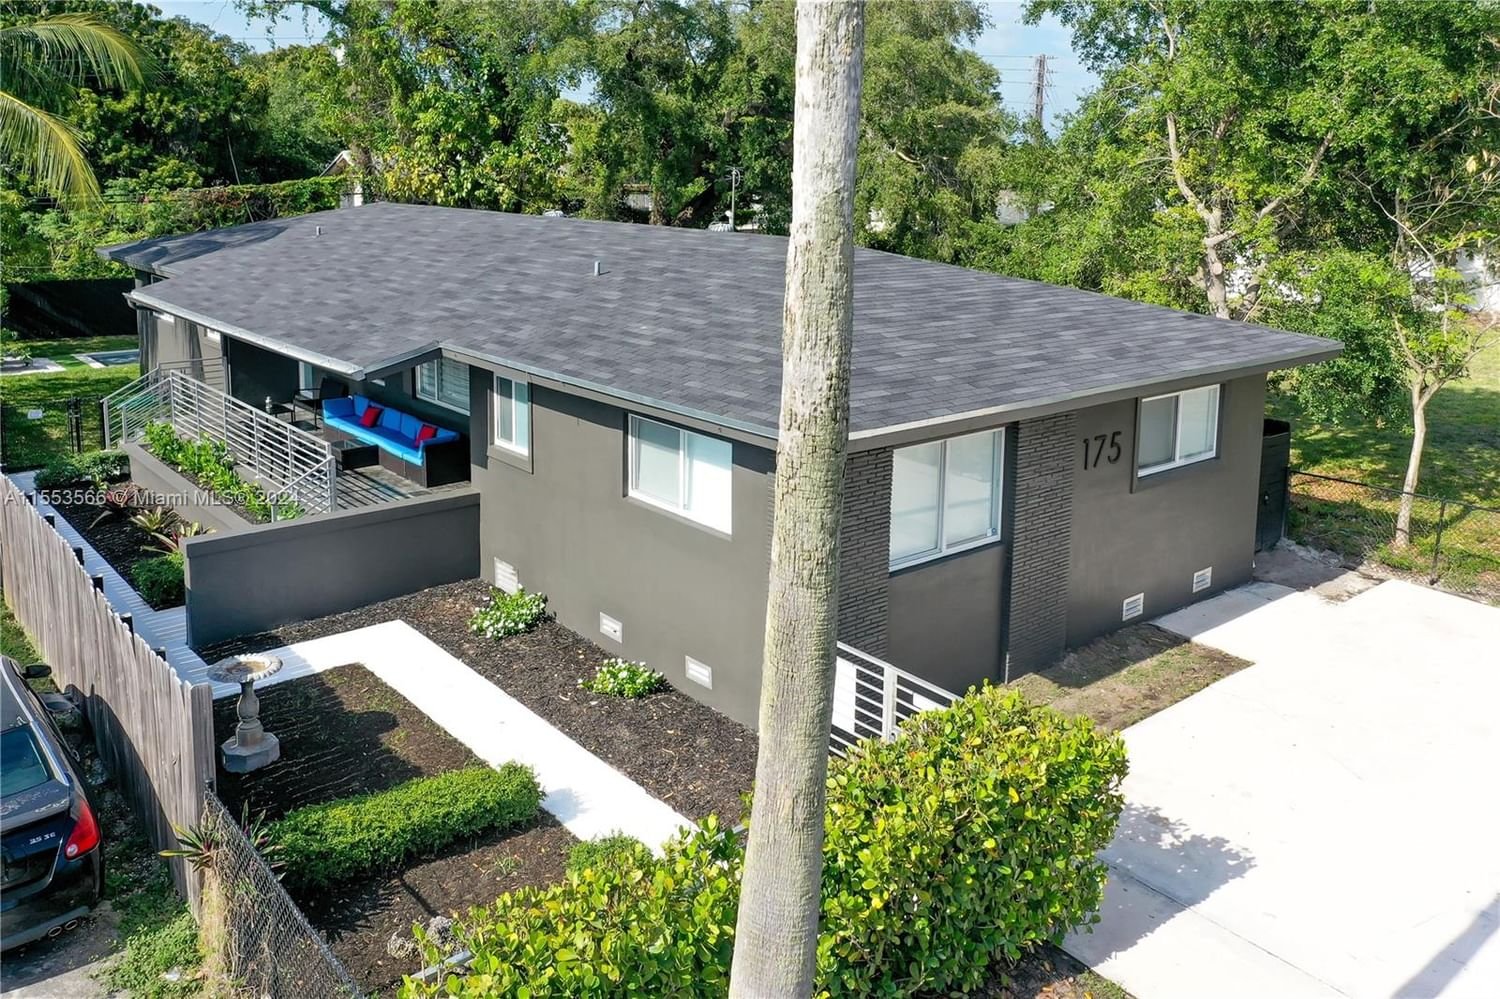 Real estate property located at 175 49th St, Miami-Dade County, BELLAIRE SUB, Miami, FL